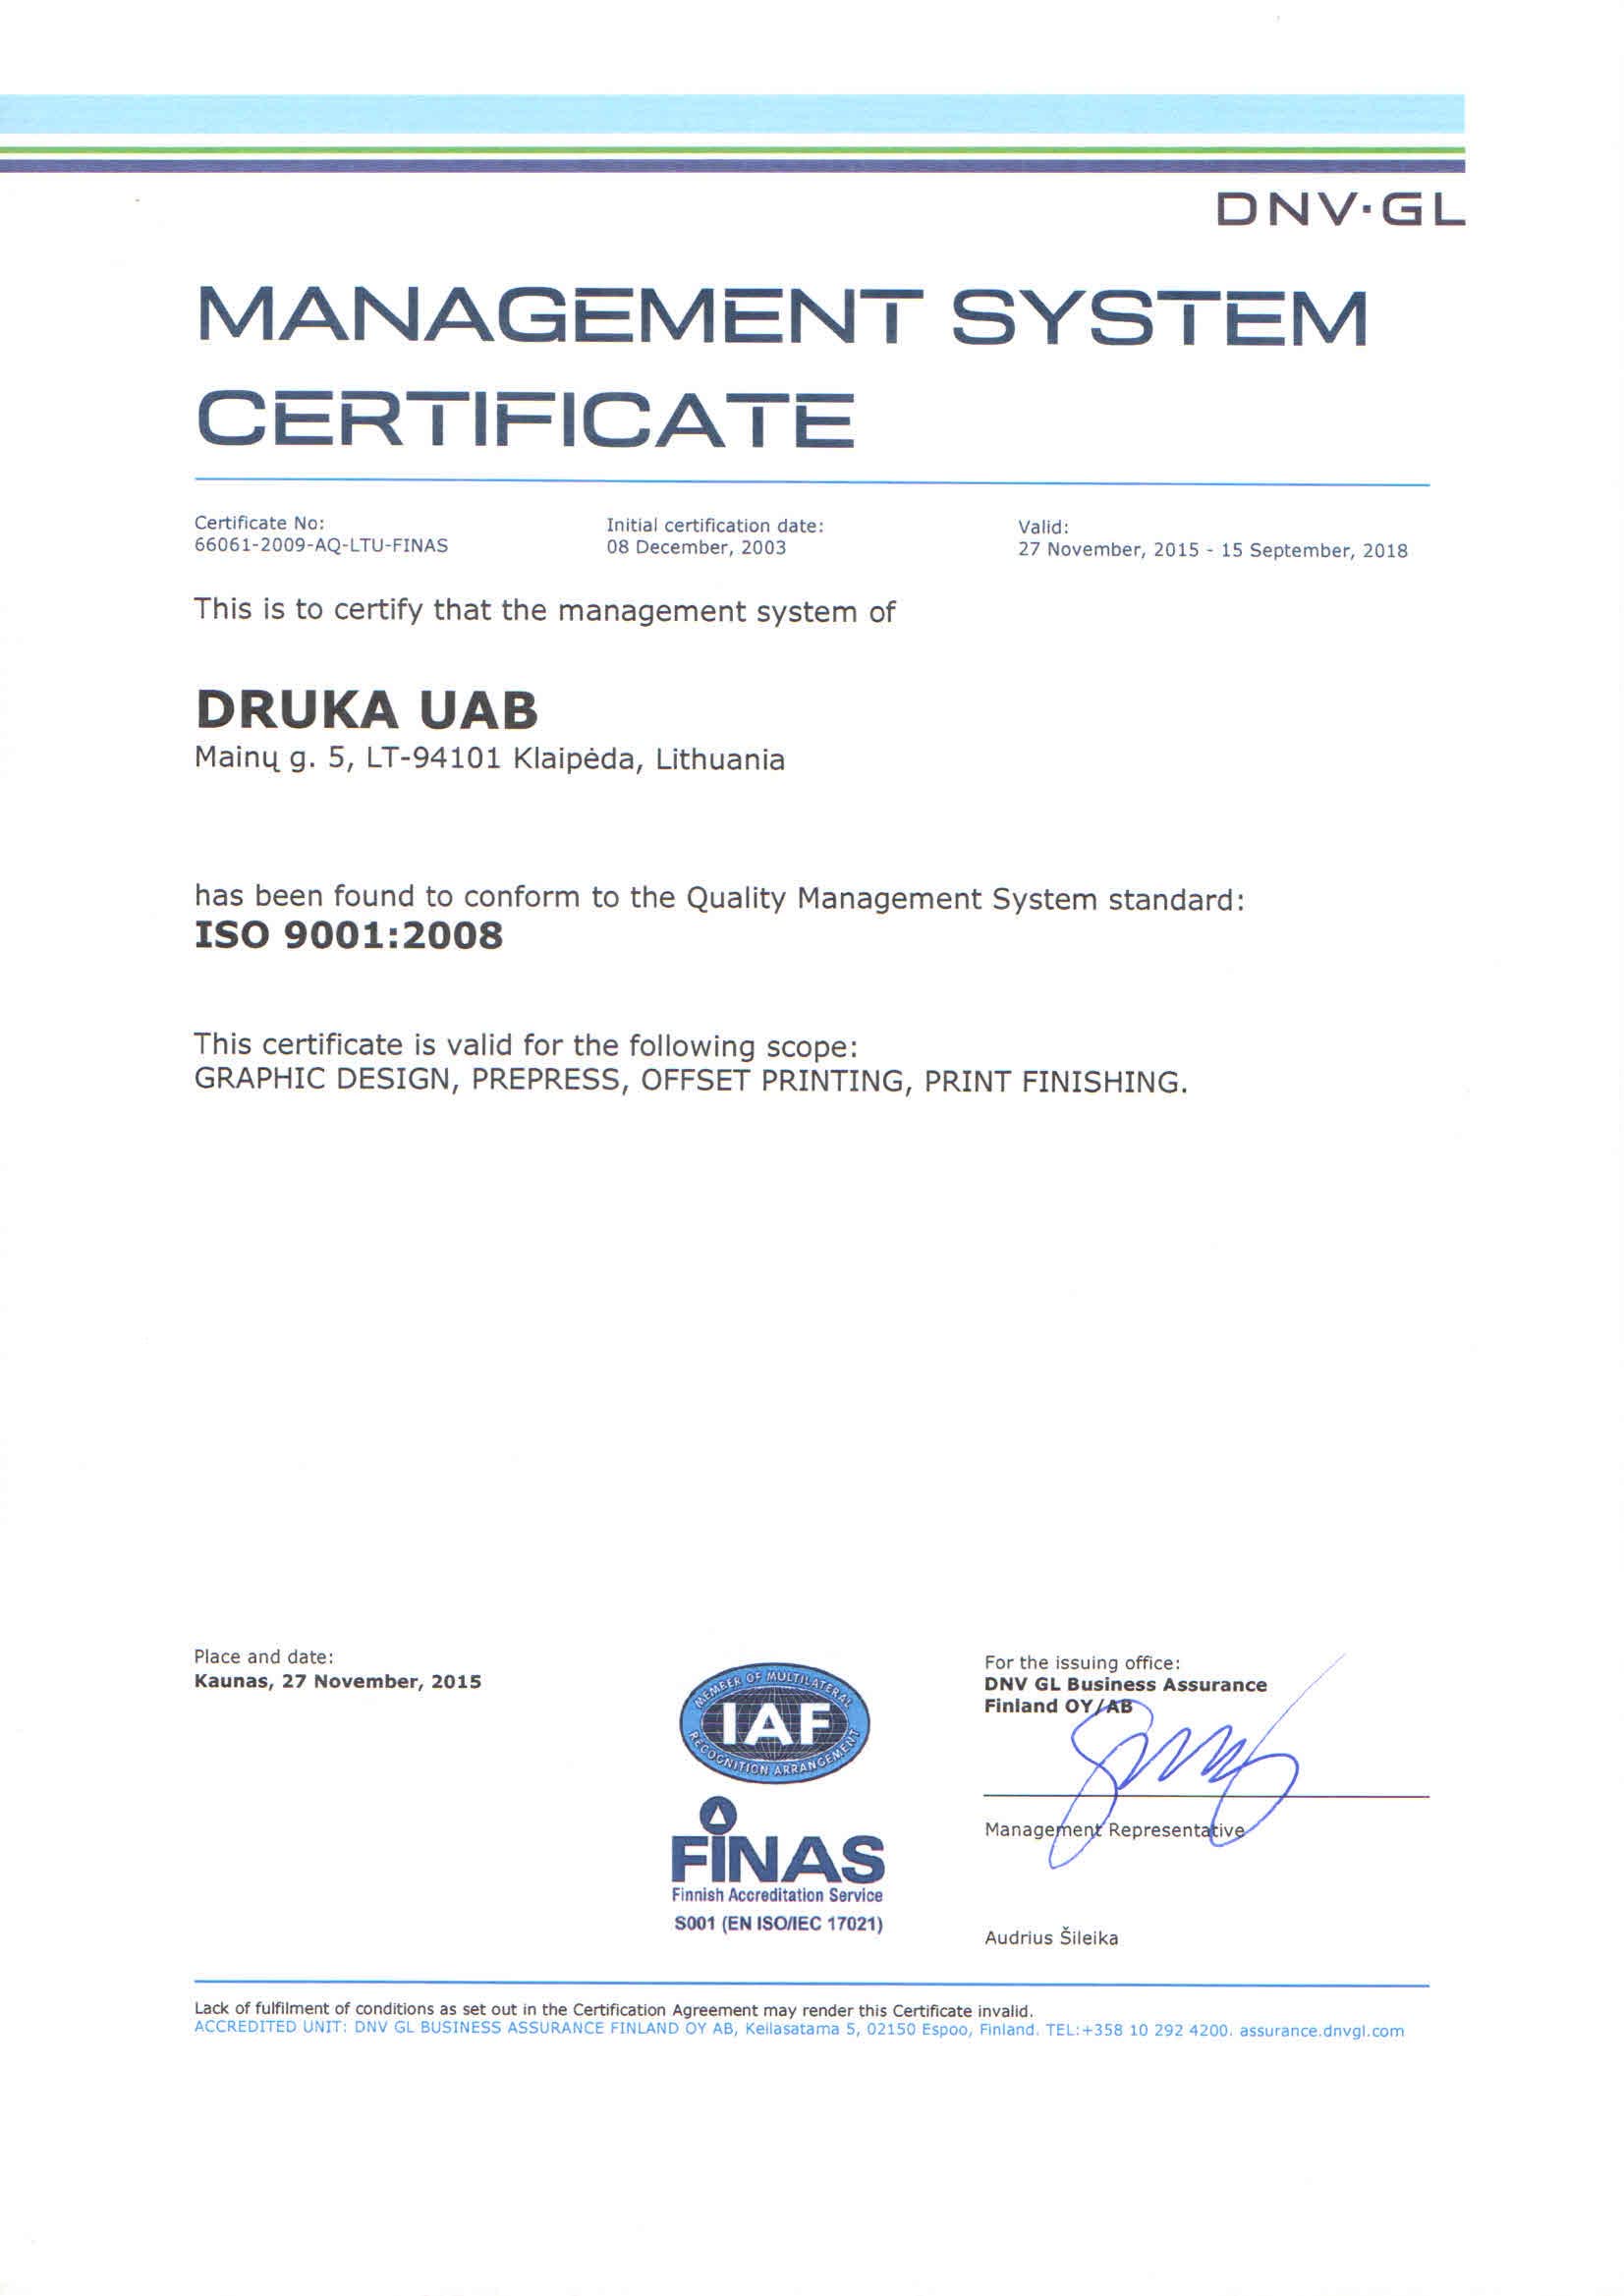 Printing house Druka ISO9001